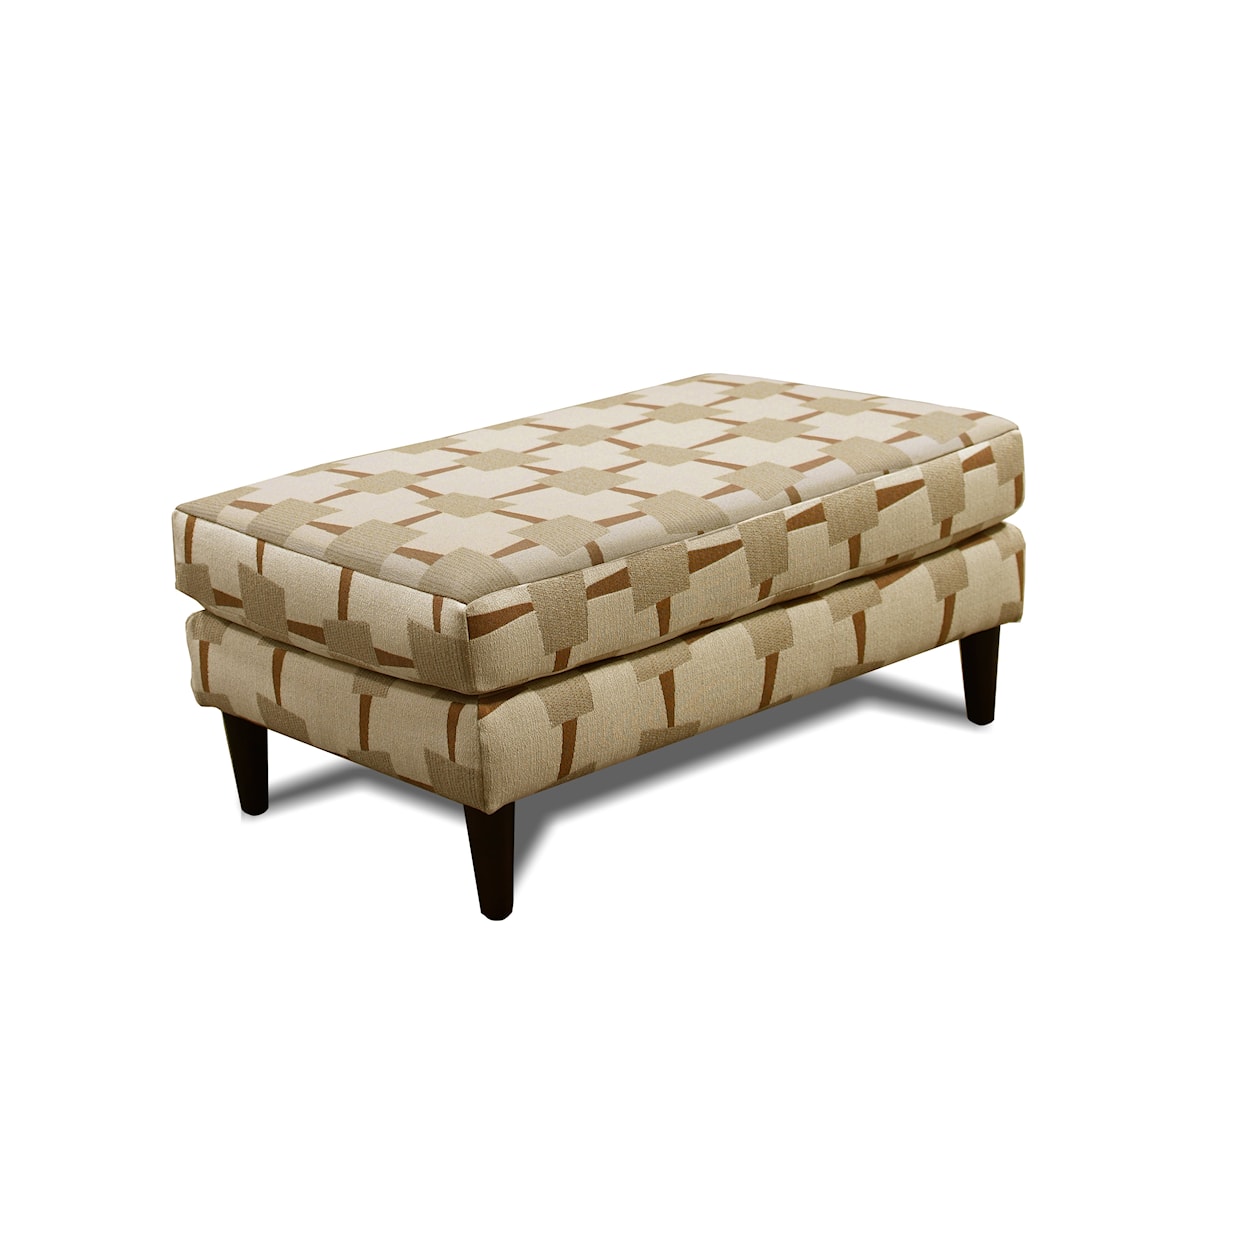 England 7950 Series Upholstered Rectangular Ottoman